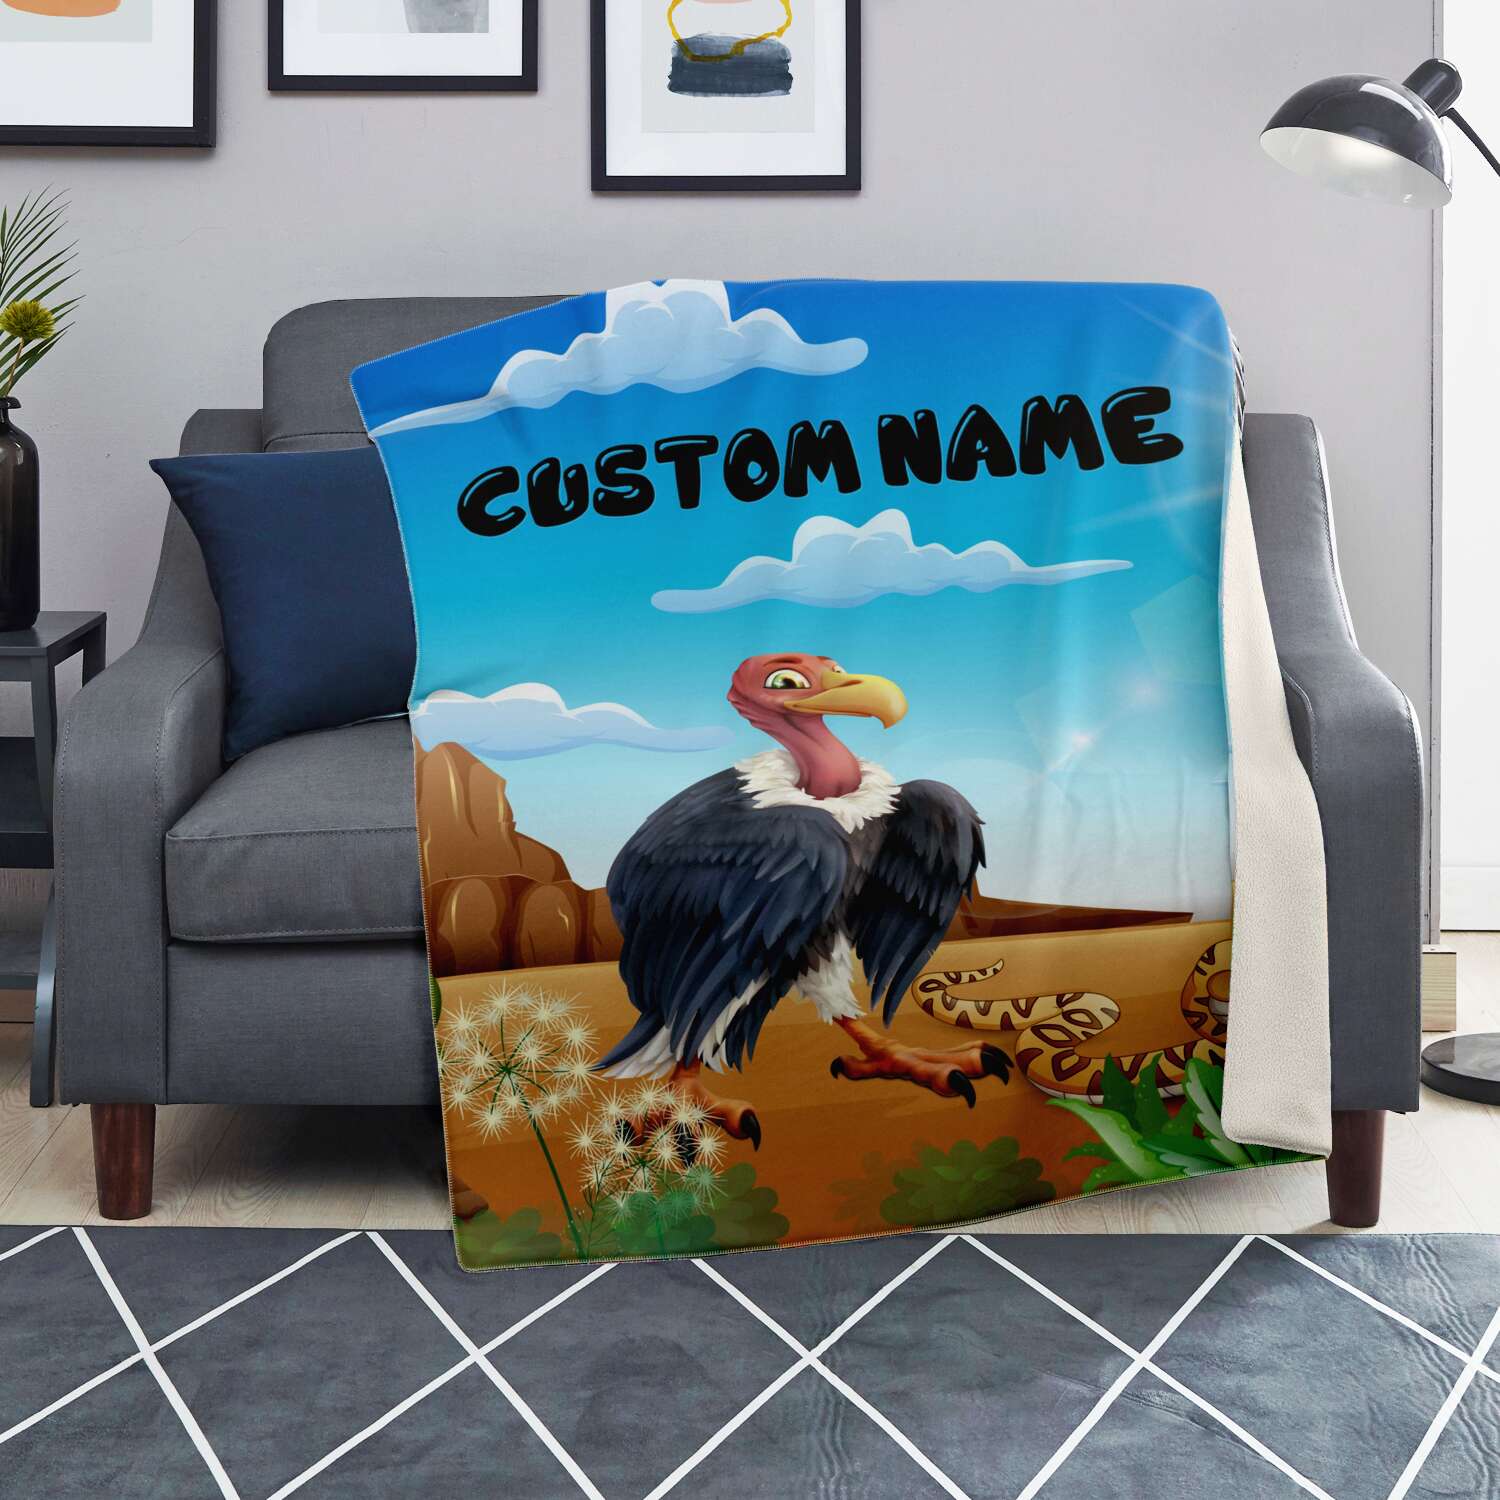 Personalized Name Vulture Blanket, Custom Name Wild Animals Blanket for Boys & Girls